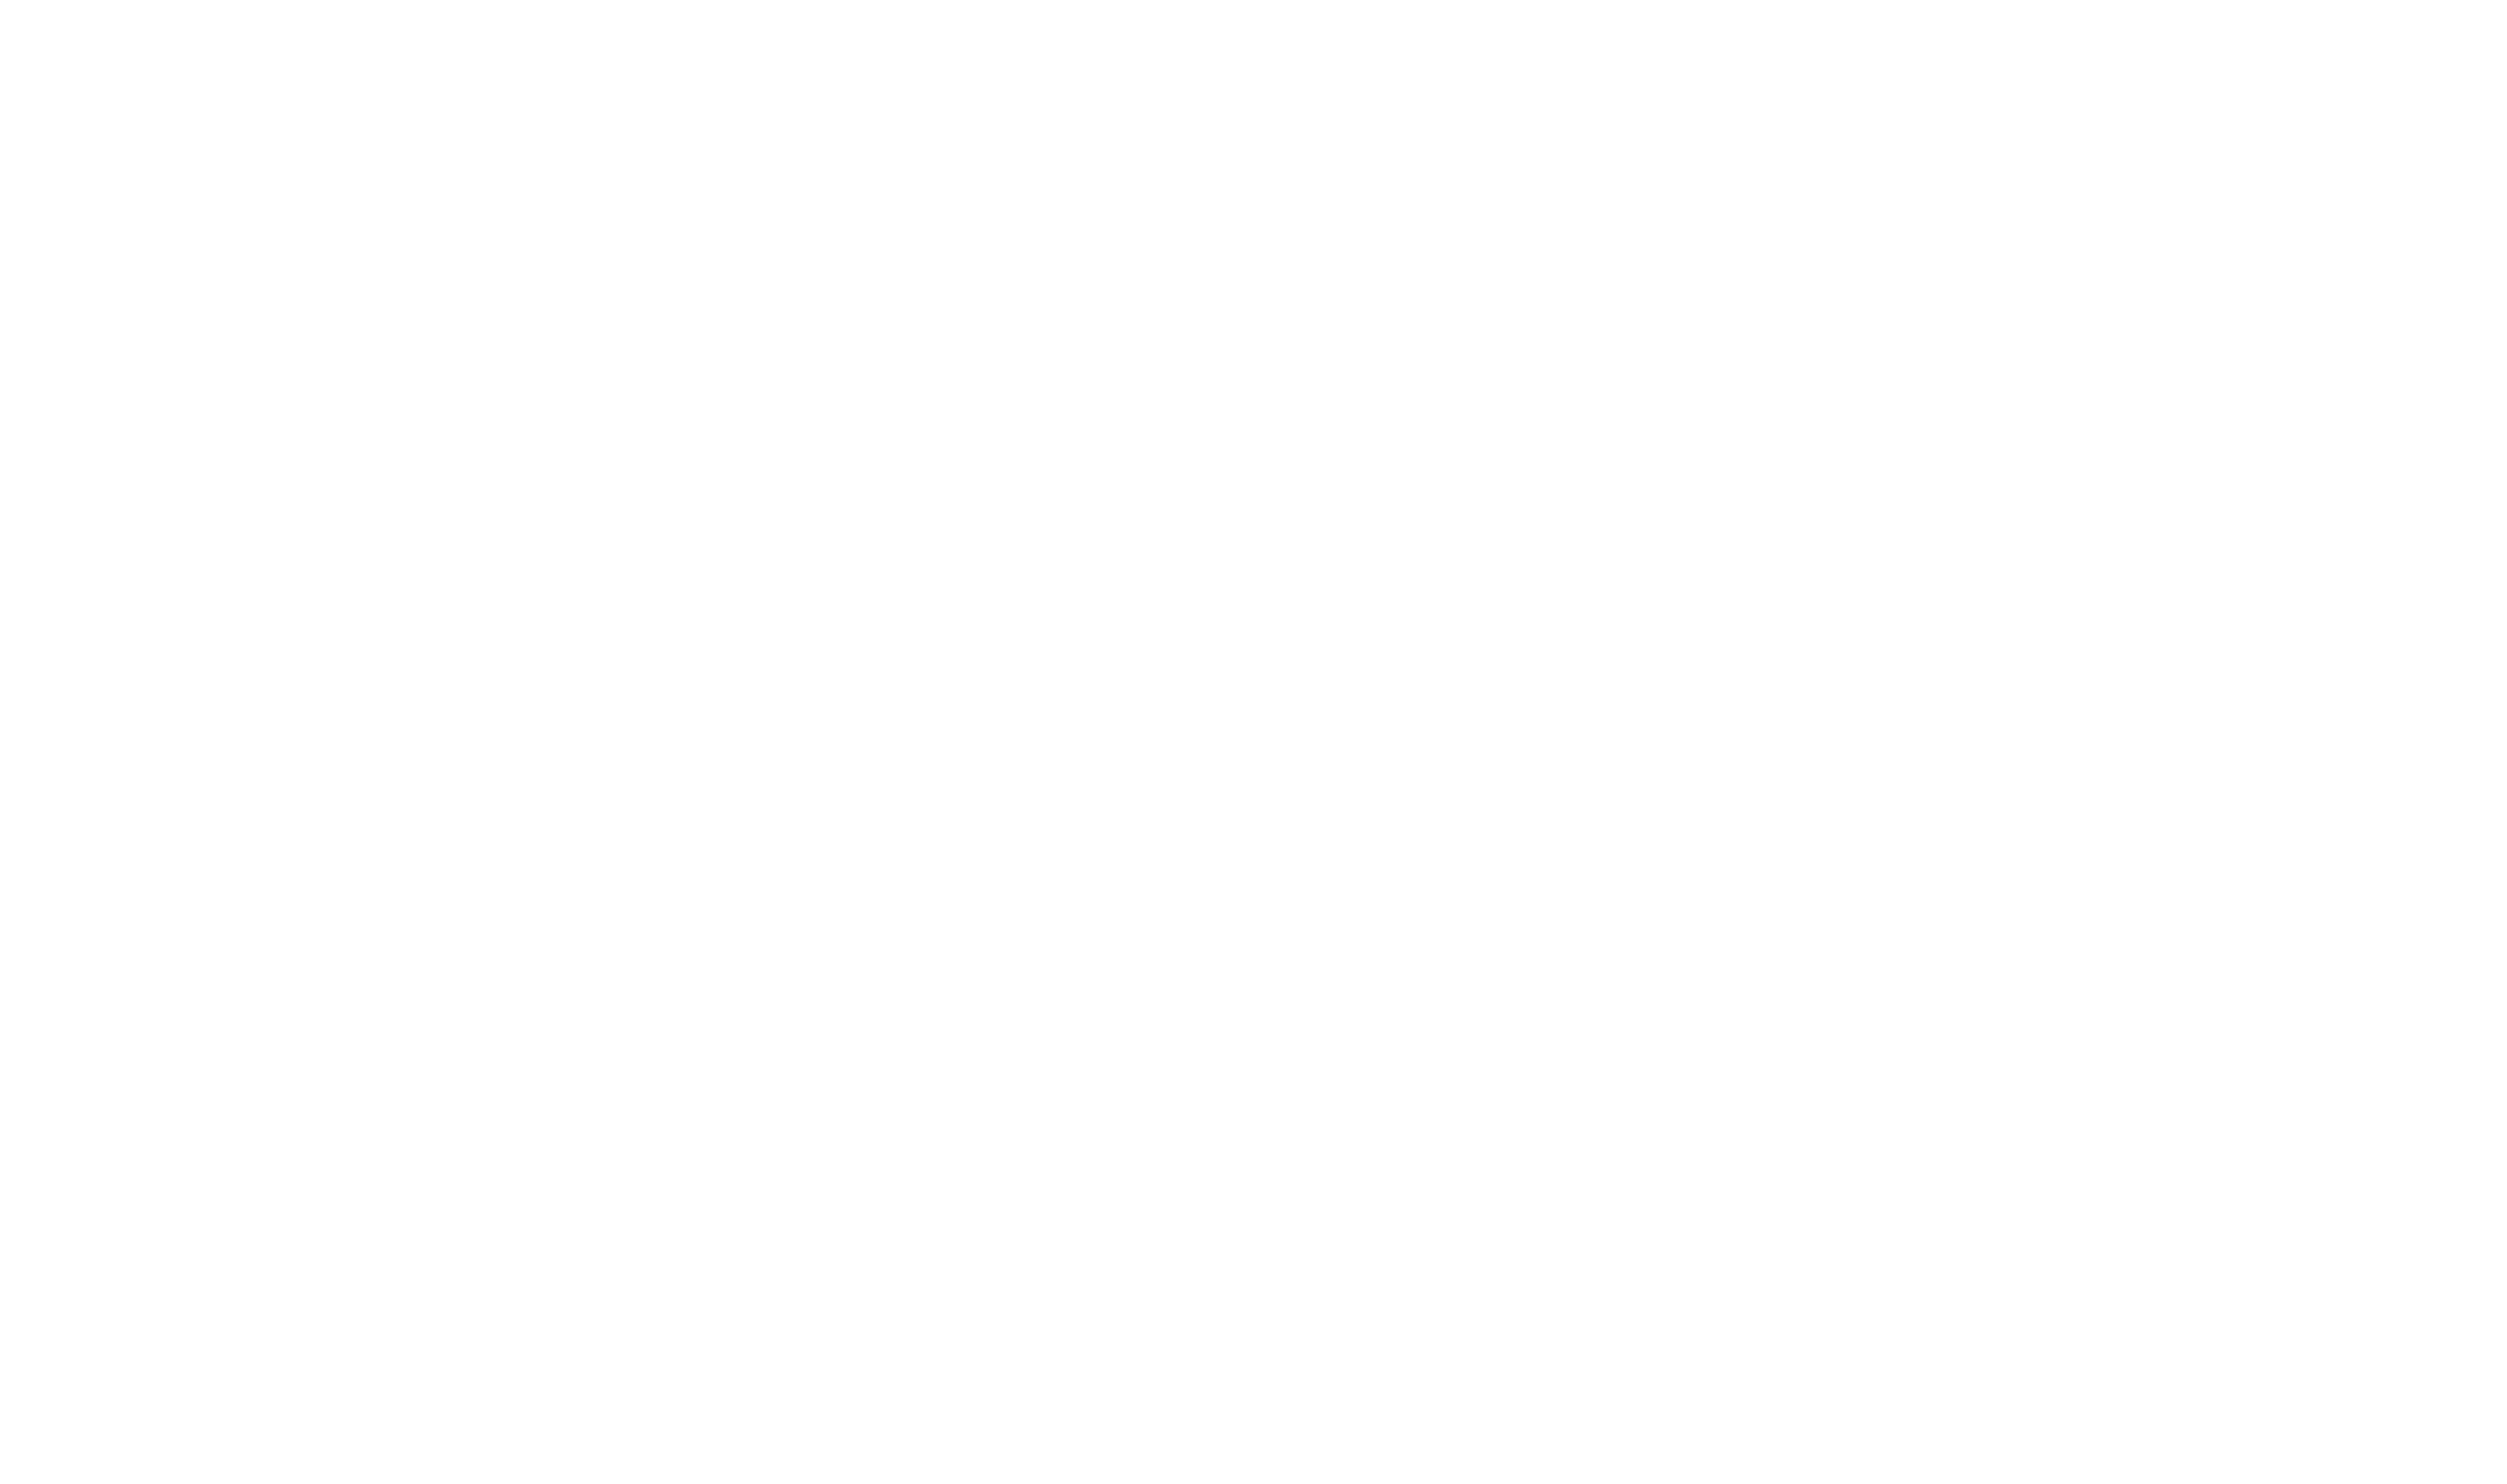 Tesla Certified Installer logo